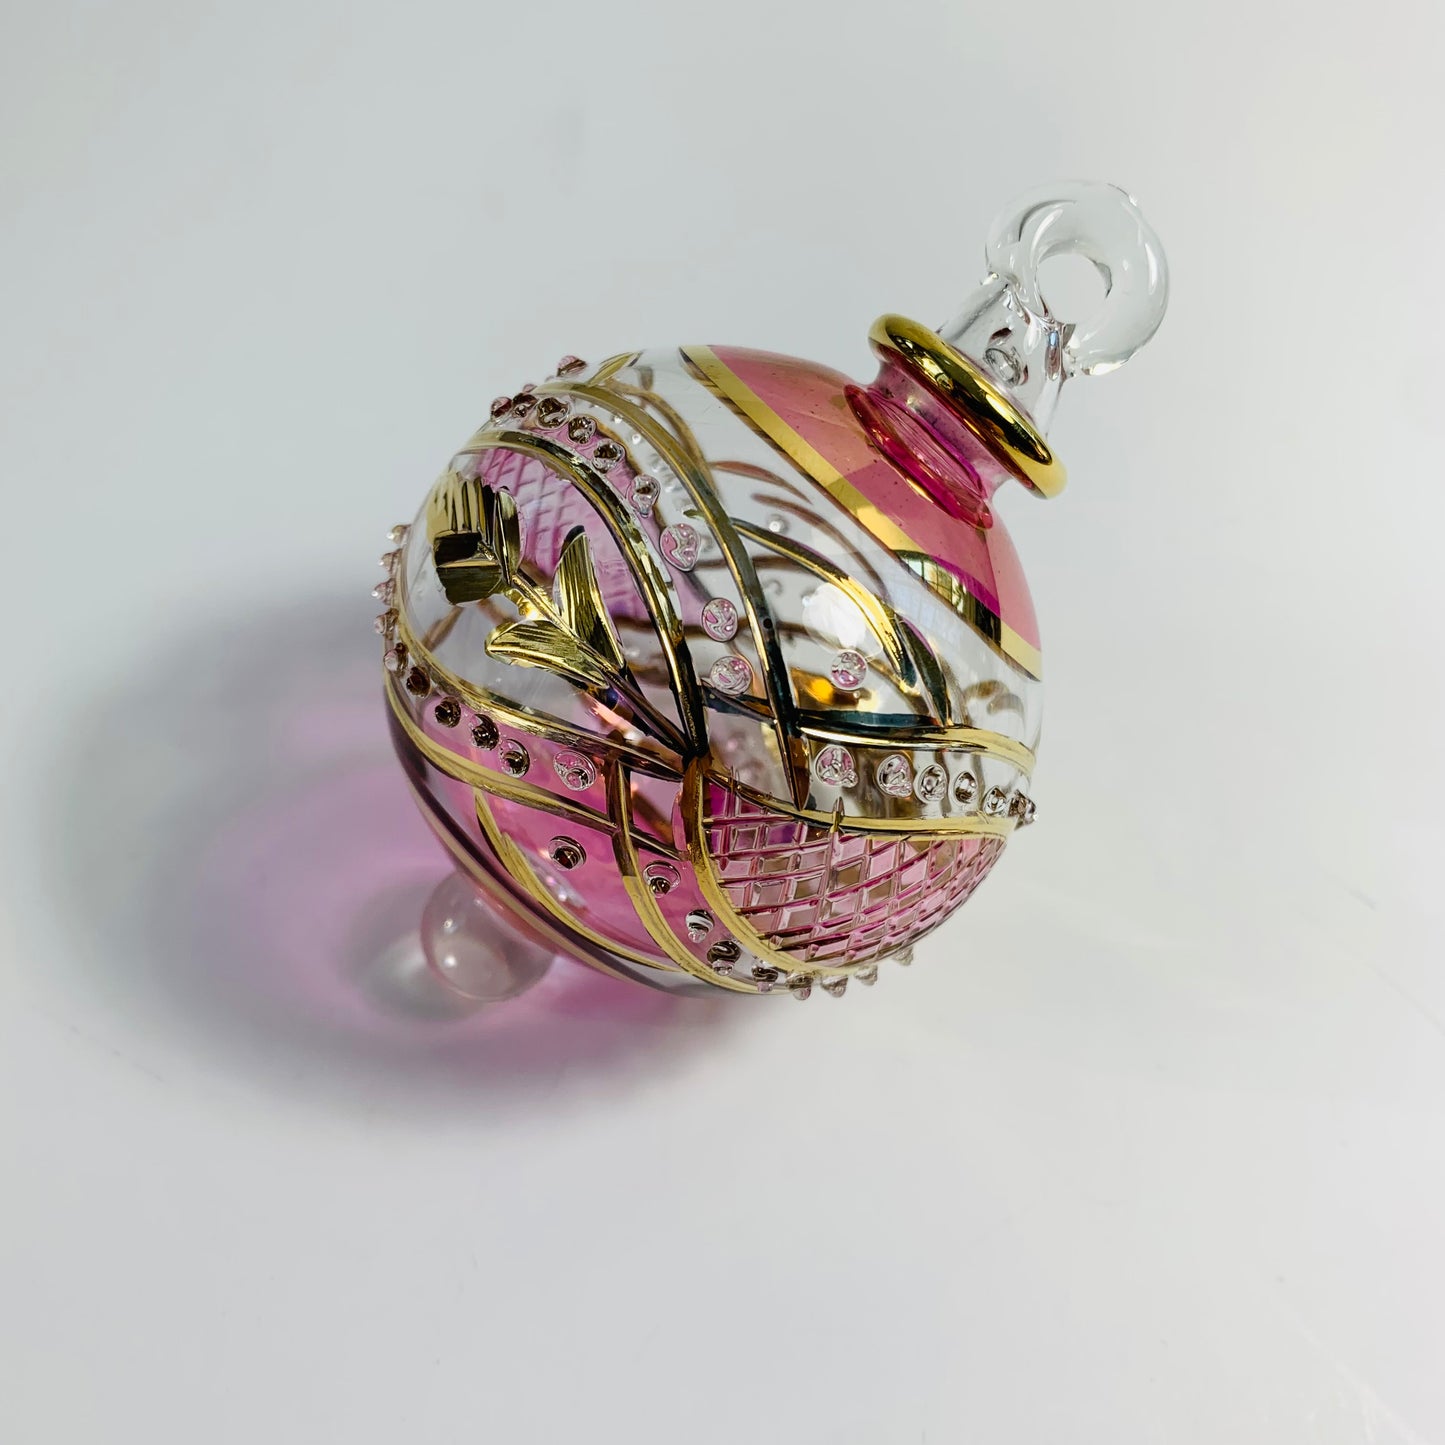 Blown Glass Small Ornament - Garland